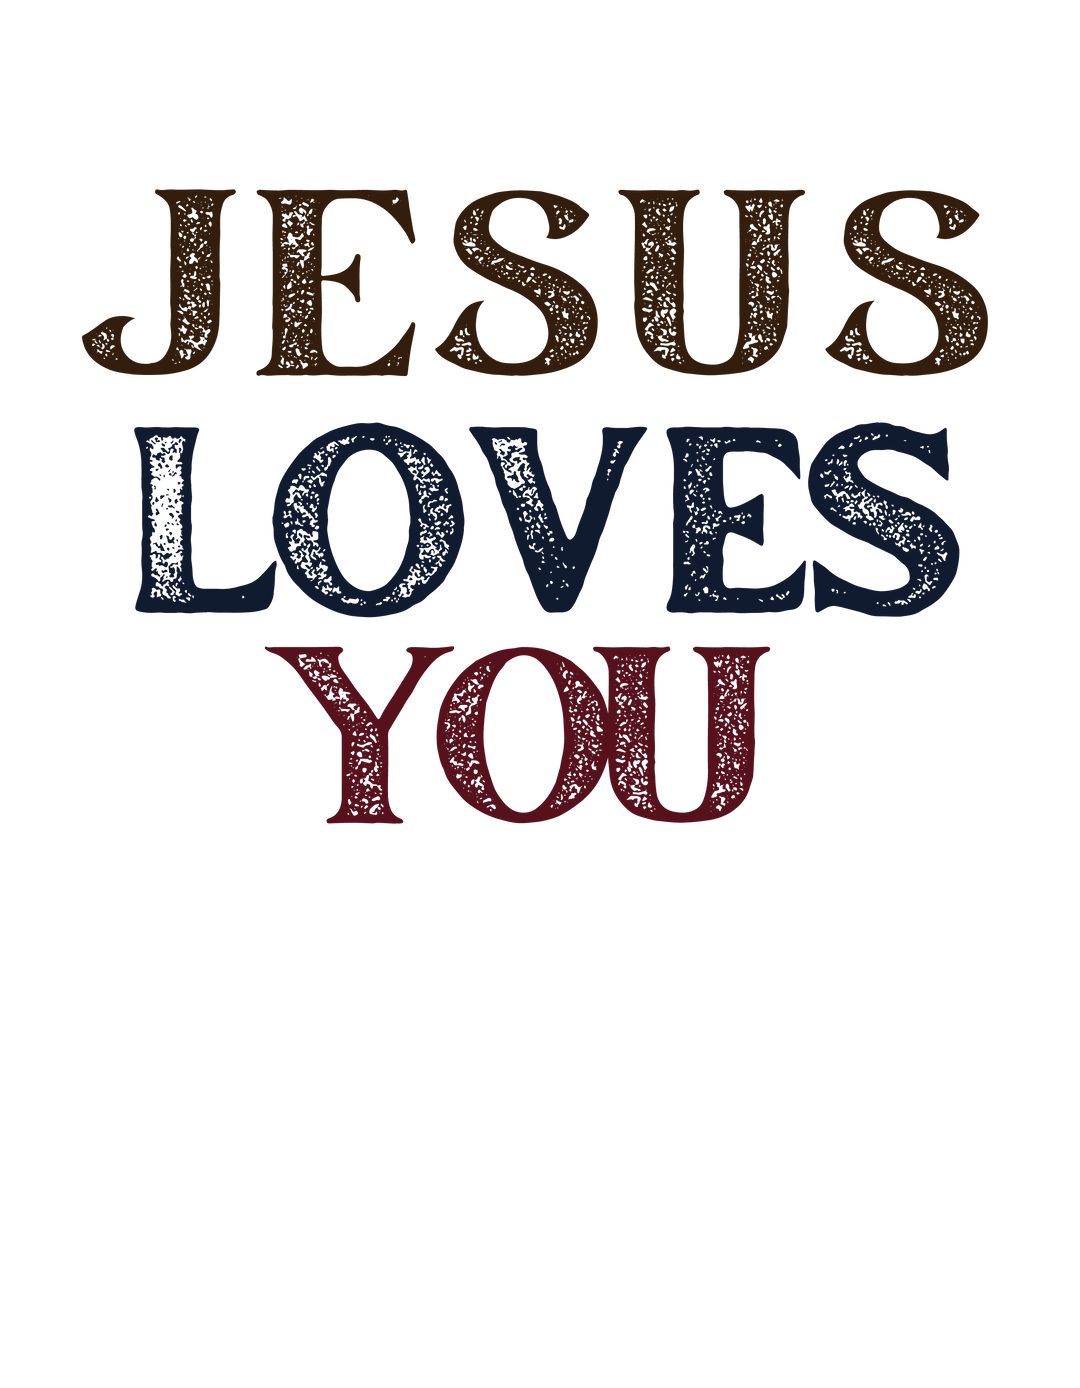 Jesus Love You Tee